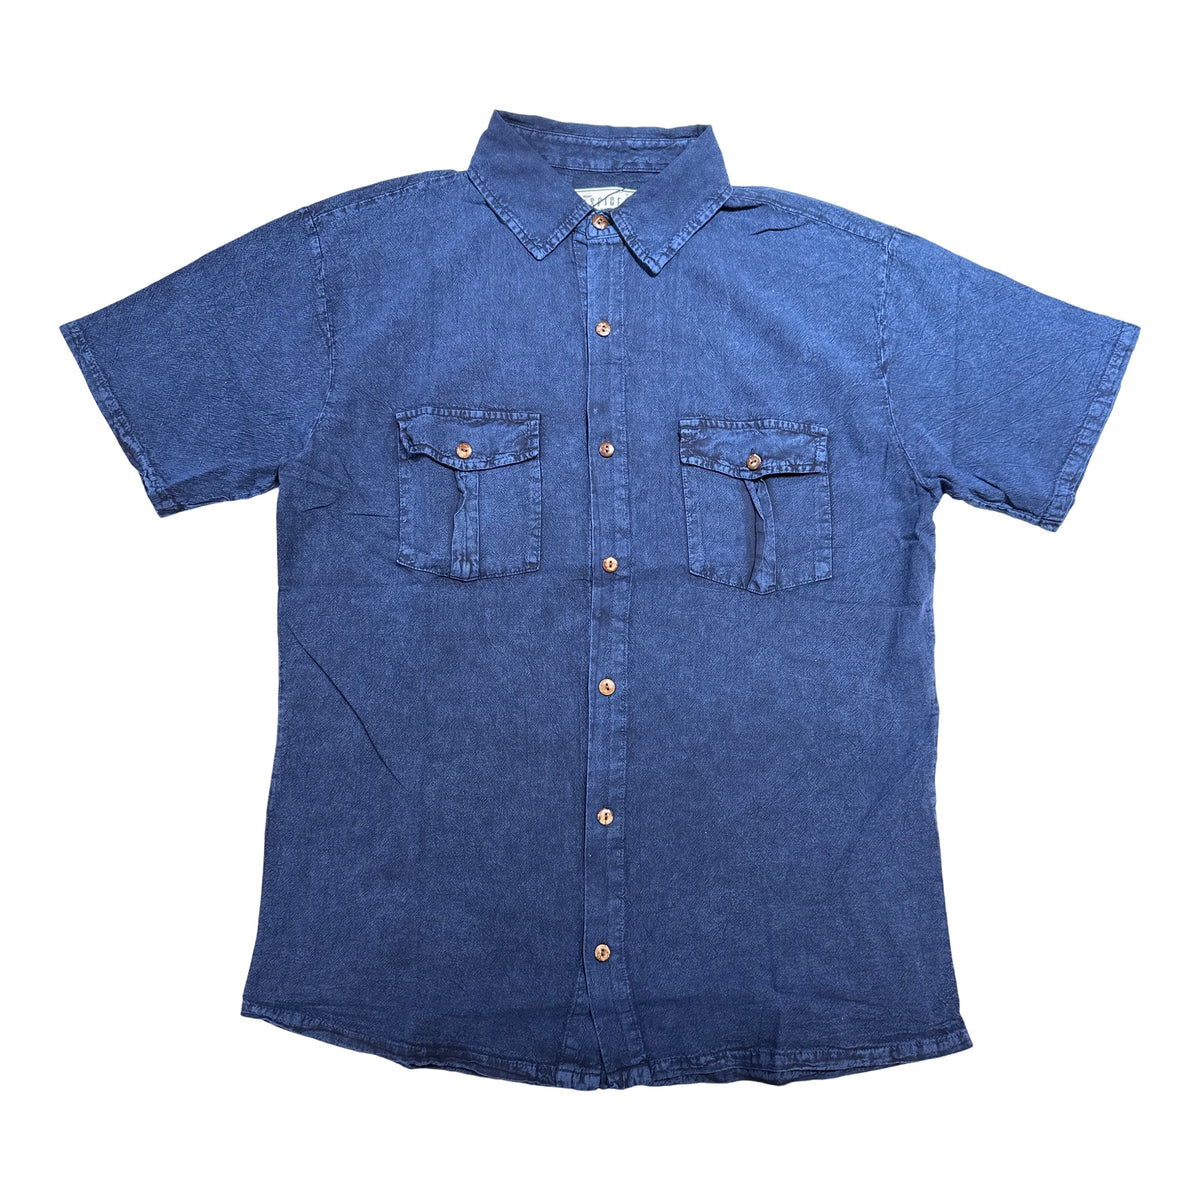 Seaspice Navy Double Pocket Peruvian Cotton Short Sleeve Shirt - Dudes Boutique